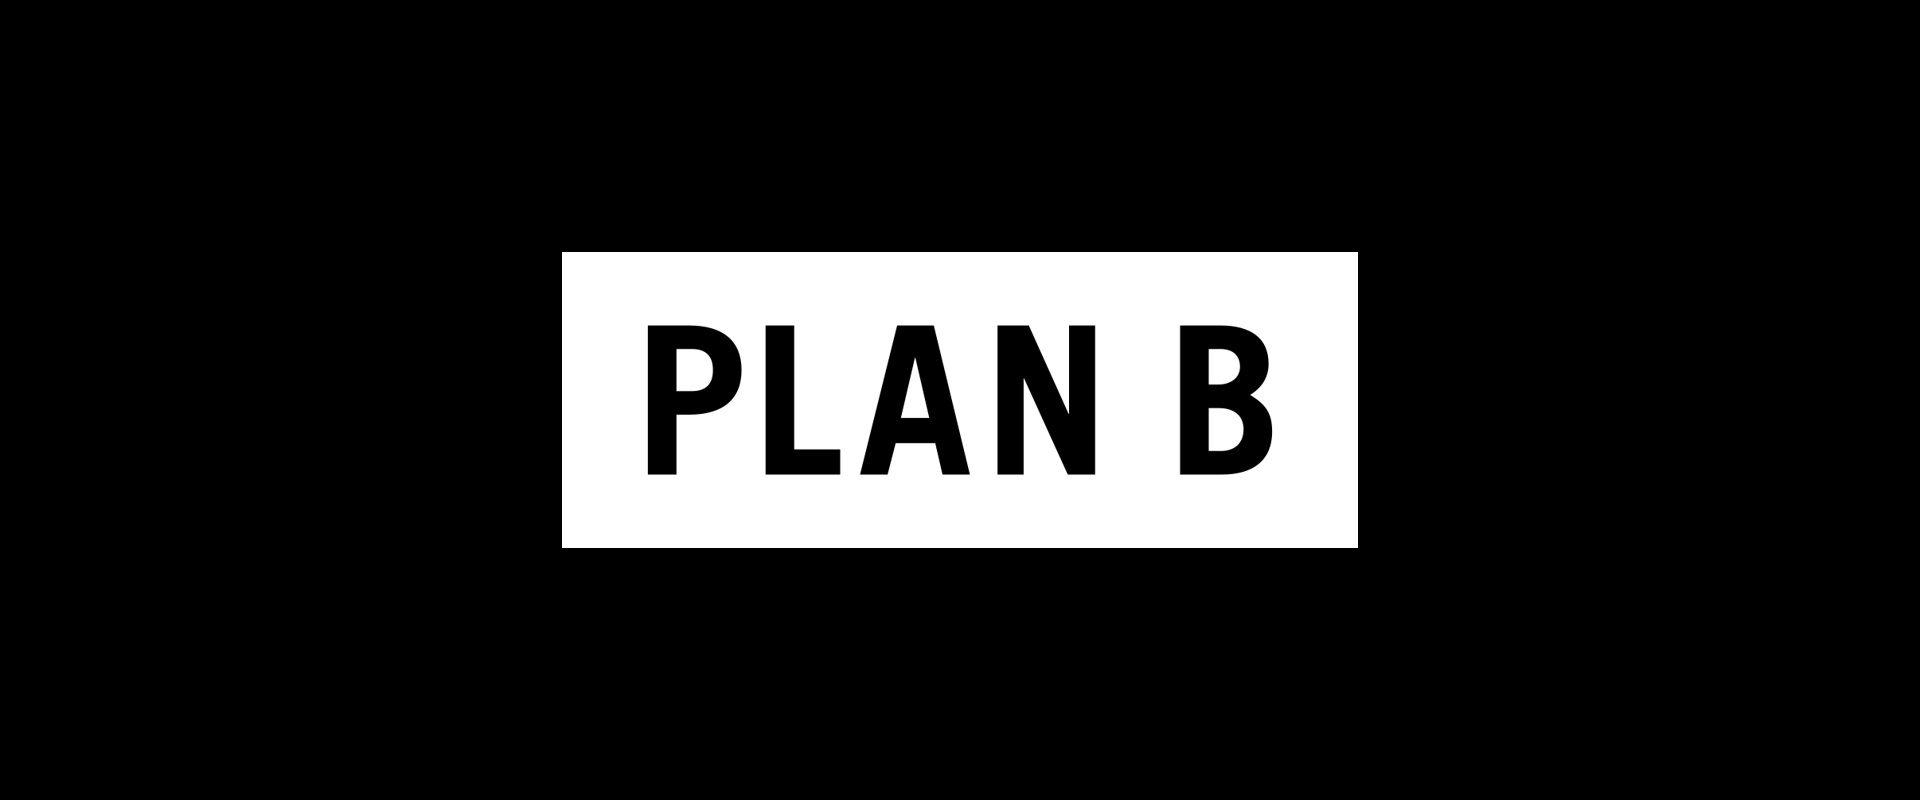 Plan B Logo - Image - Plan B Entertainment Logo (Cinemascope).jpg | Logopedia ...